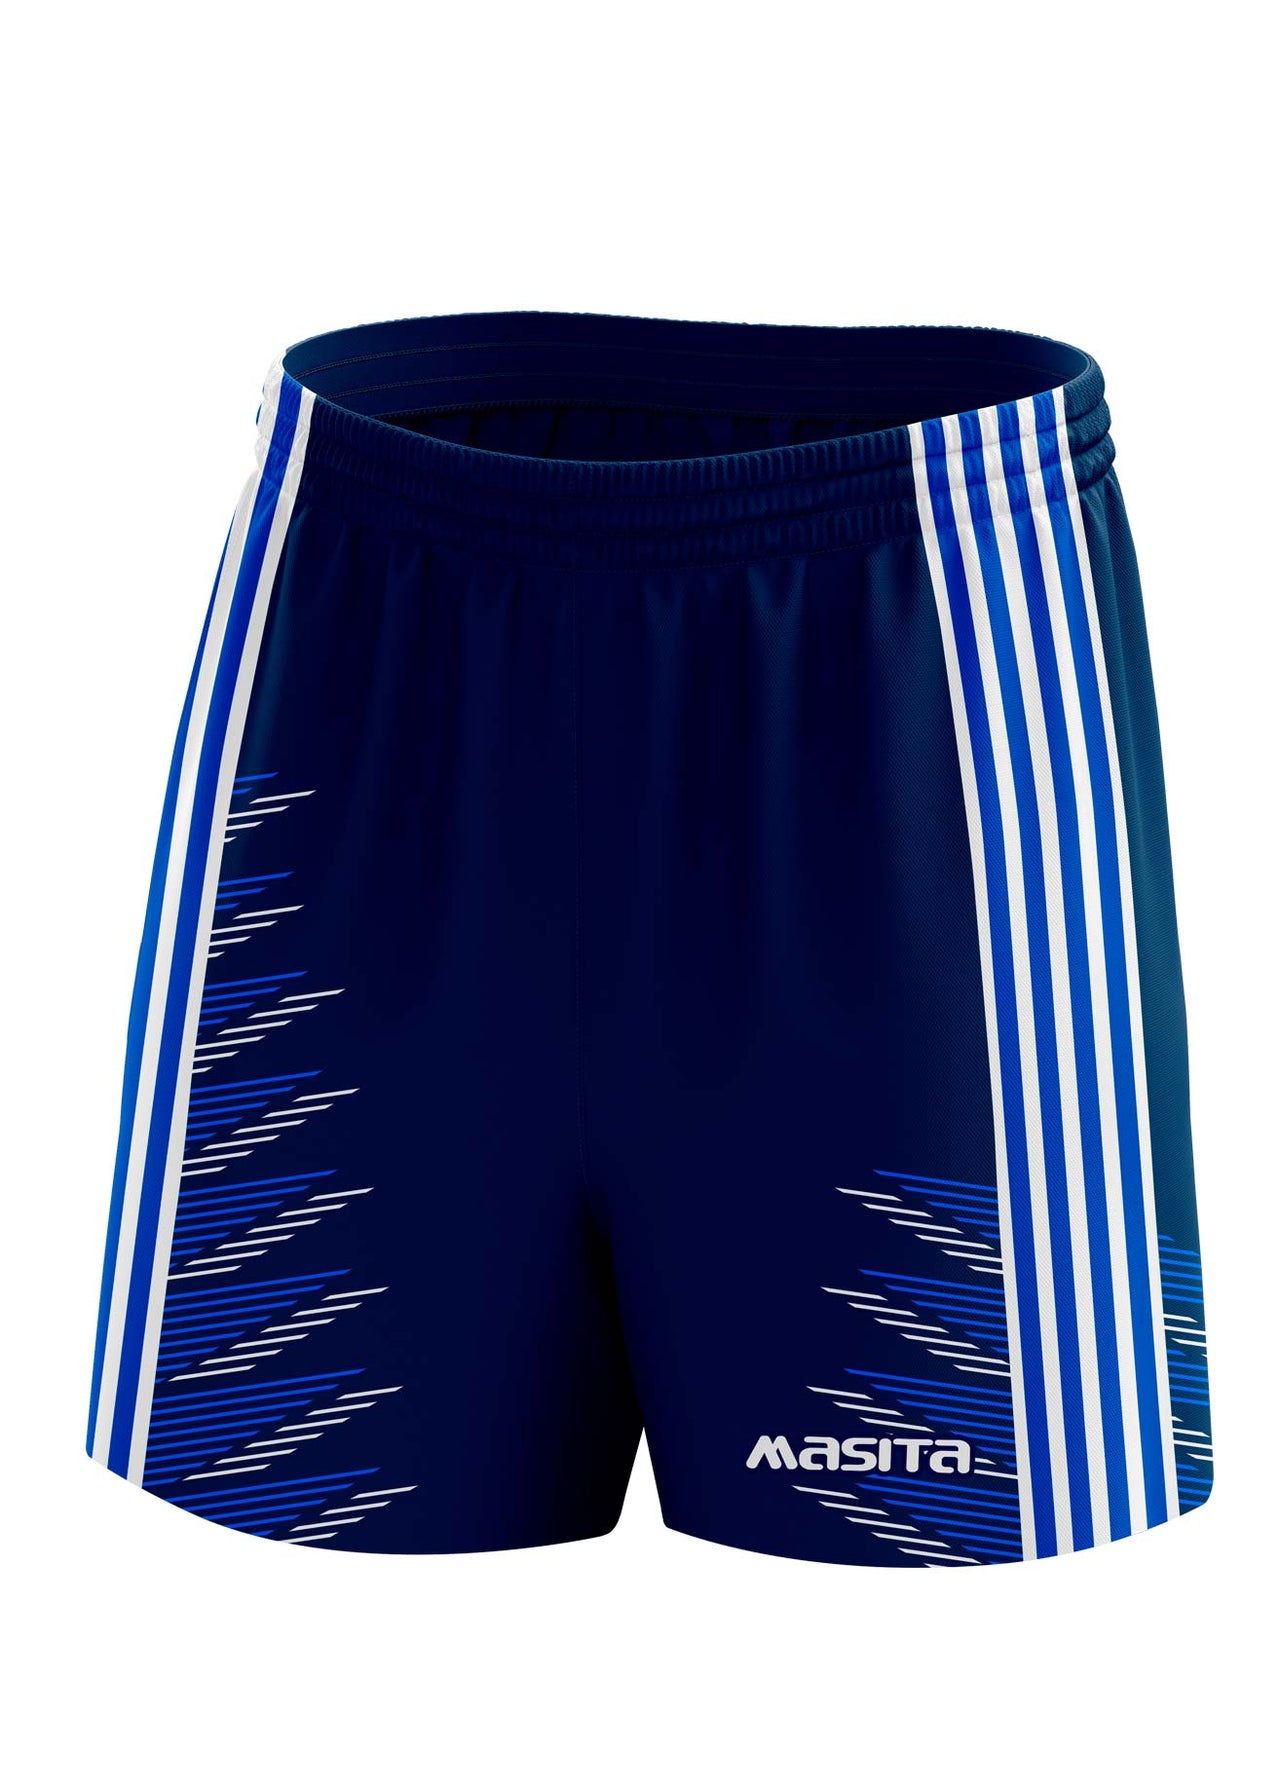 Hydro Gaelic Shorts Navy/Blue/White Adult